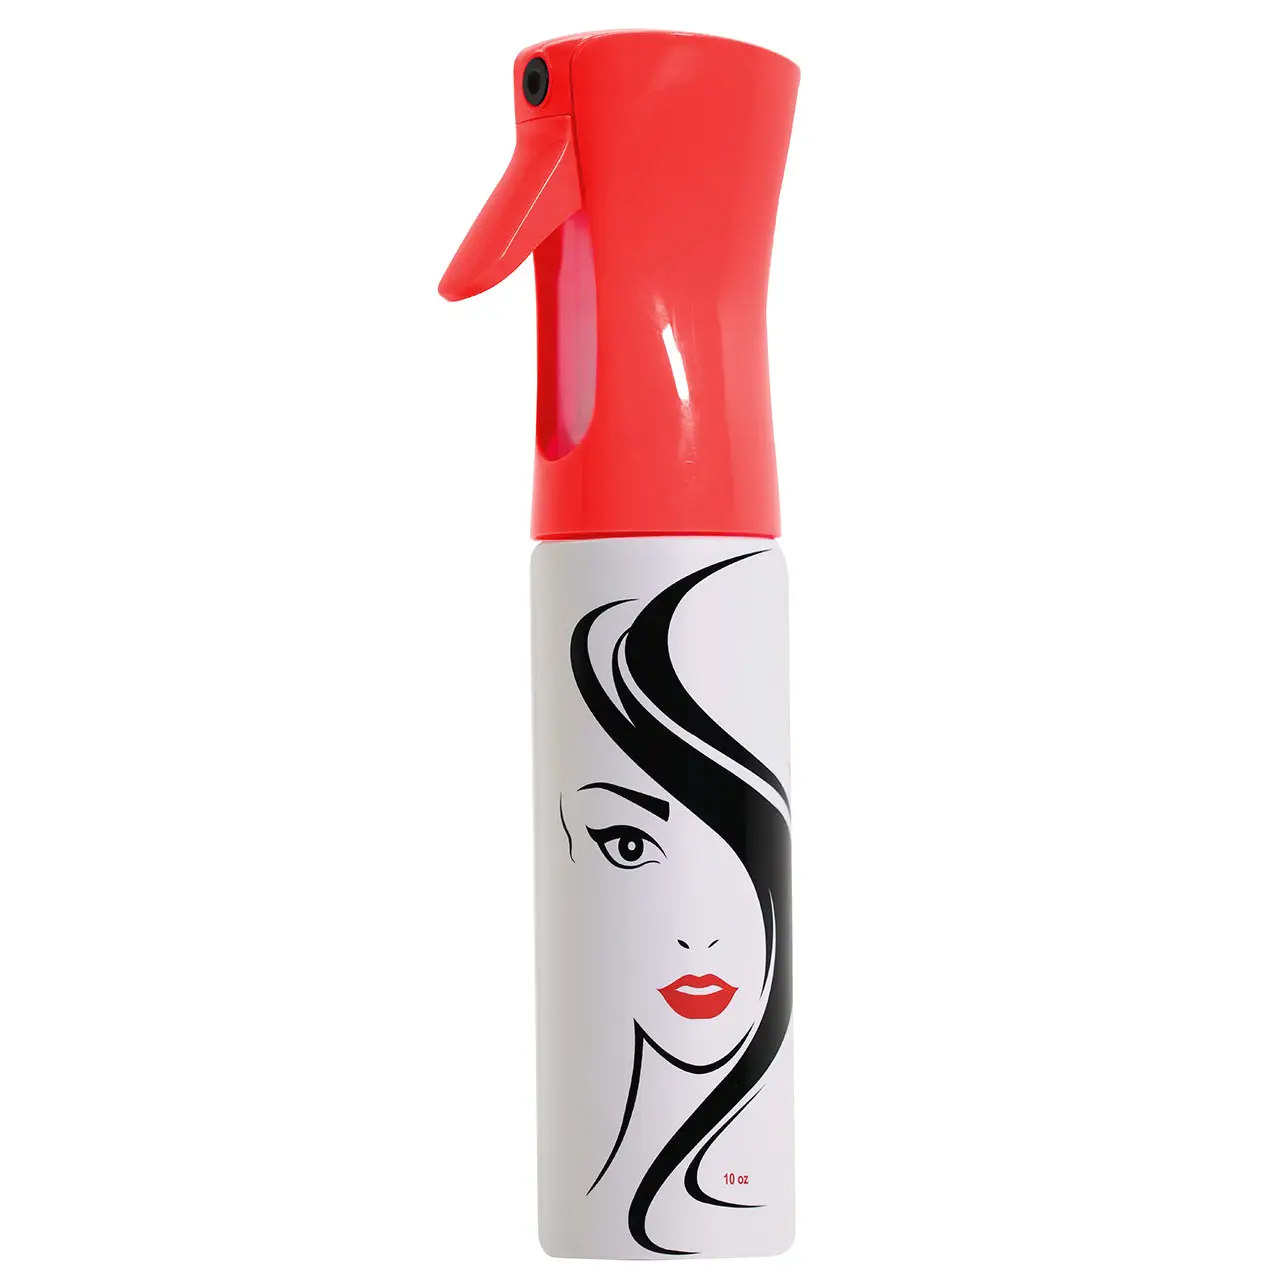 Delta 300ml Slick Chick Red Sprayer Gardening Hair Watering